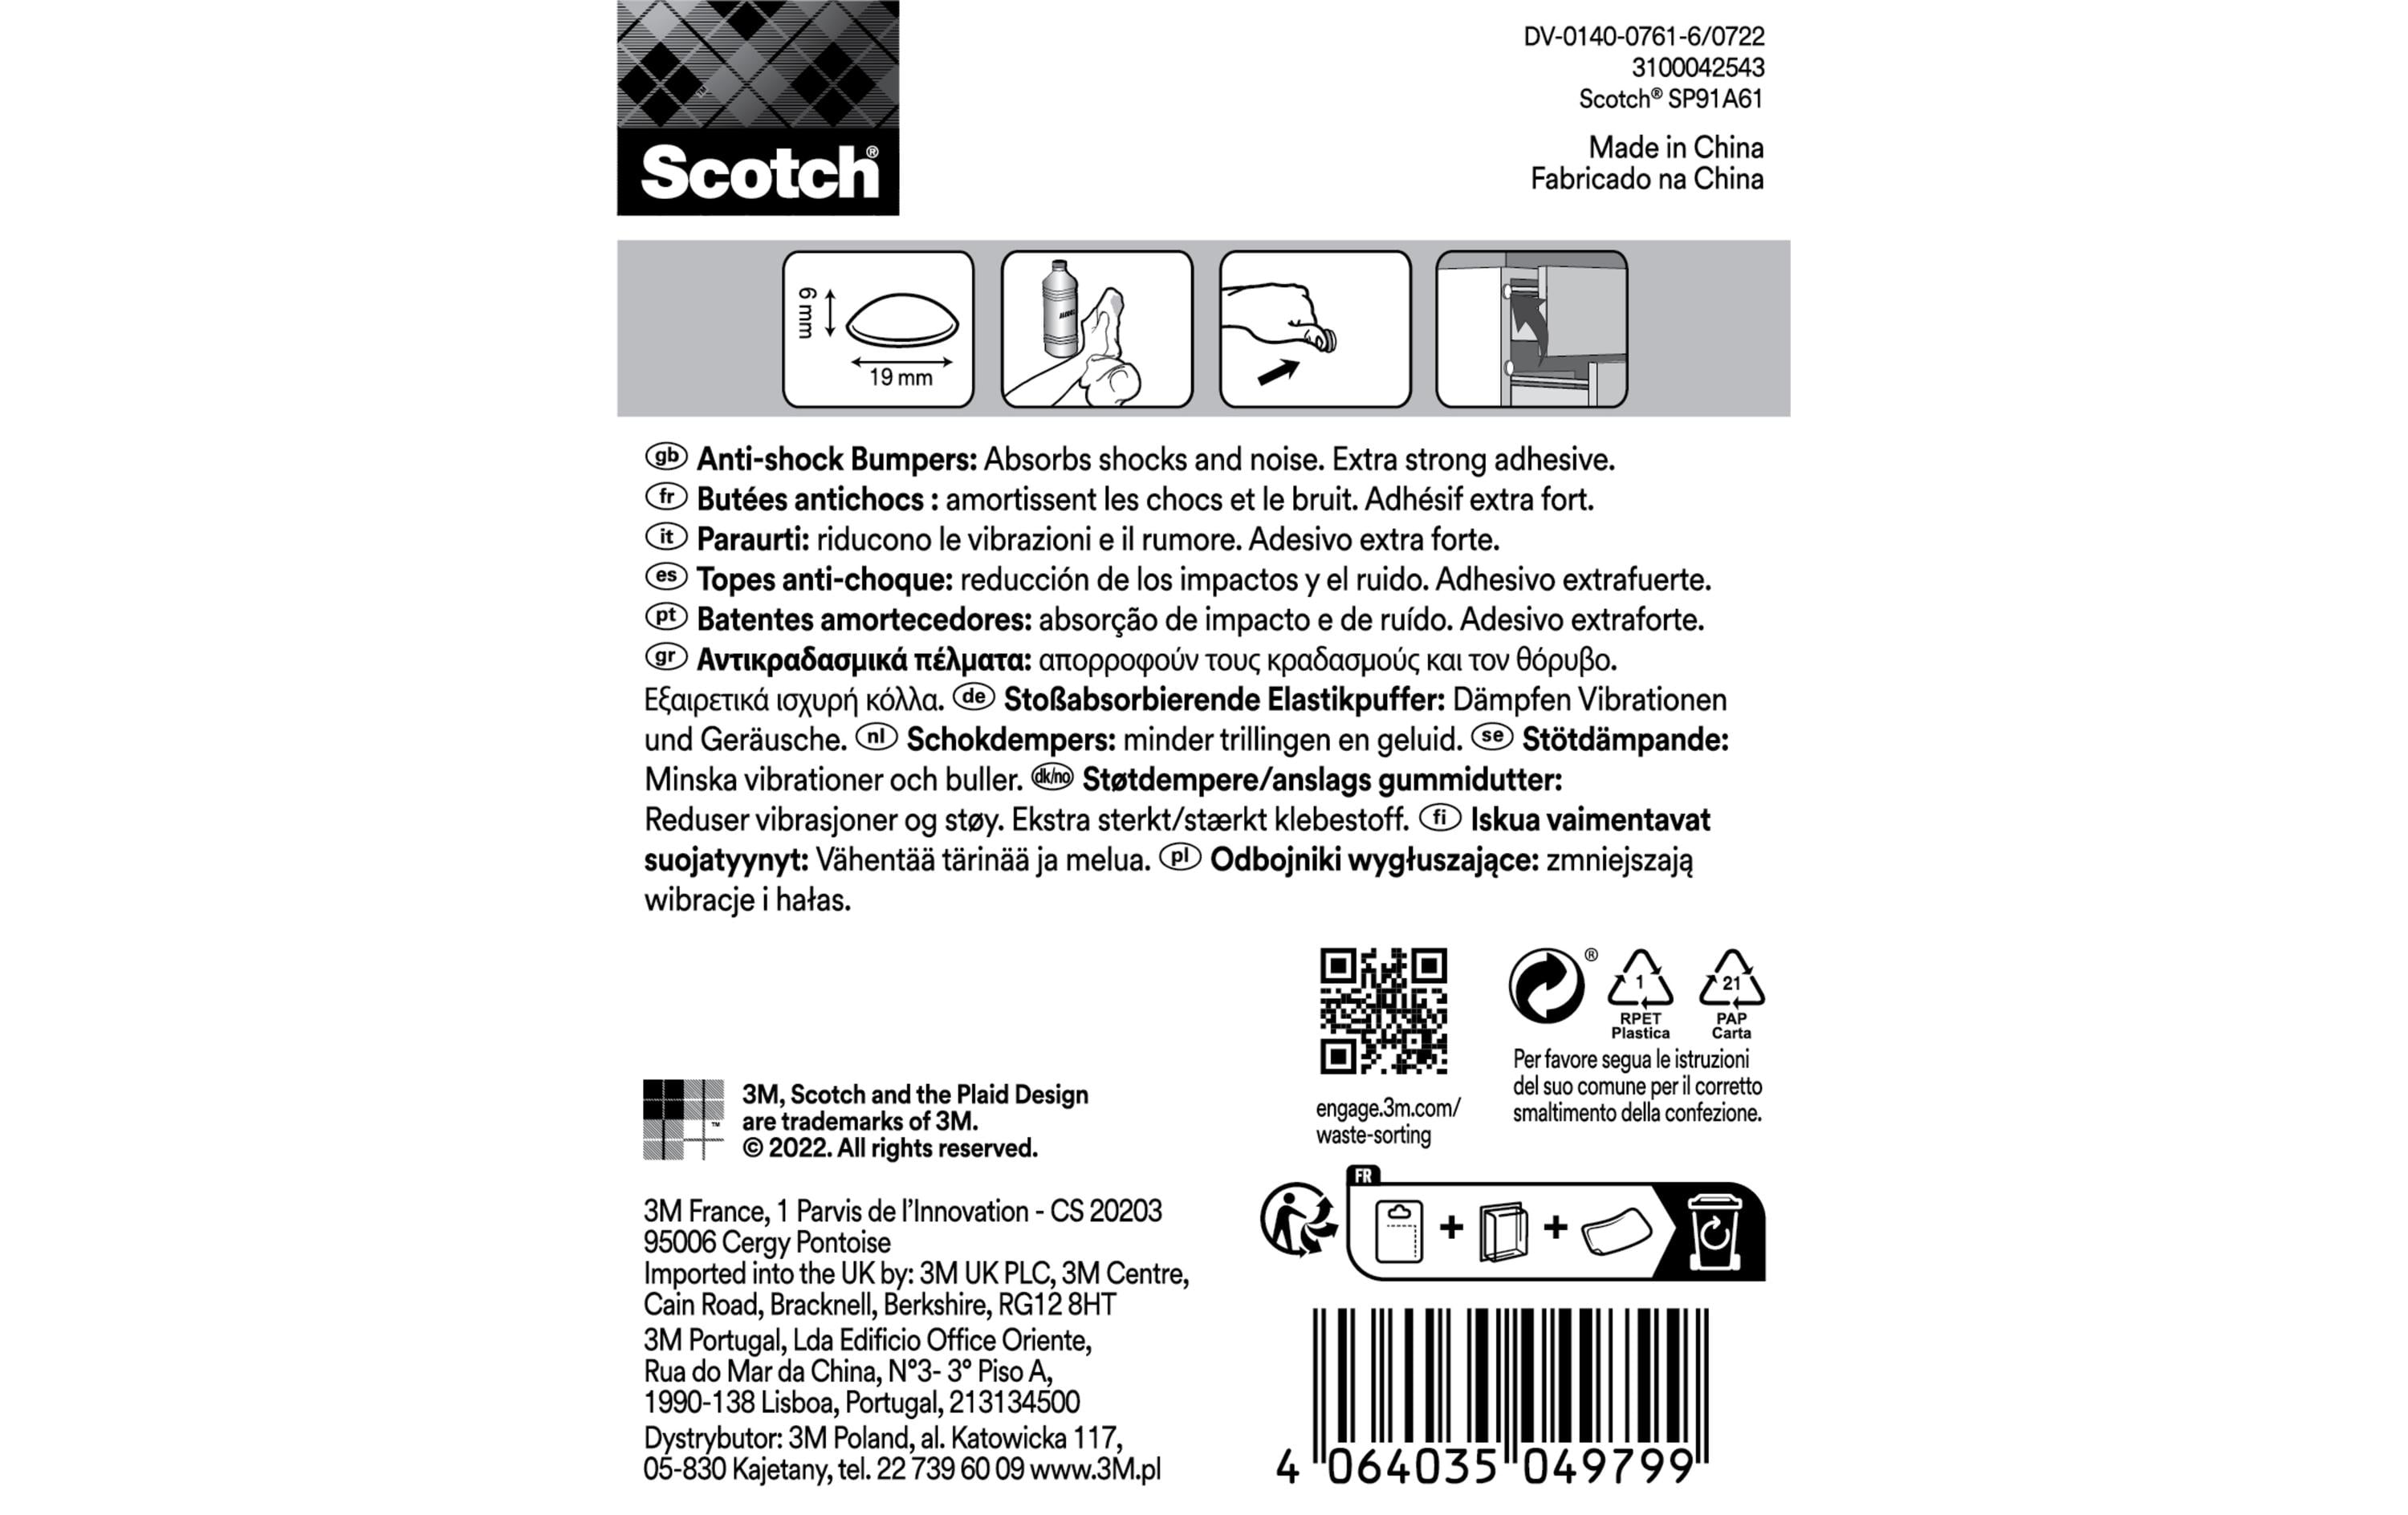 3M Schutzpuffer Anti Shock, Ø 19 mm, Transparent, 8er Pack